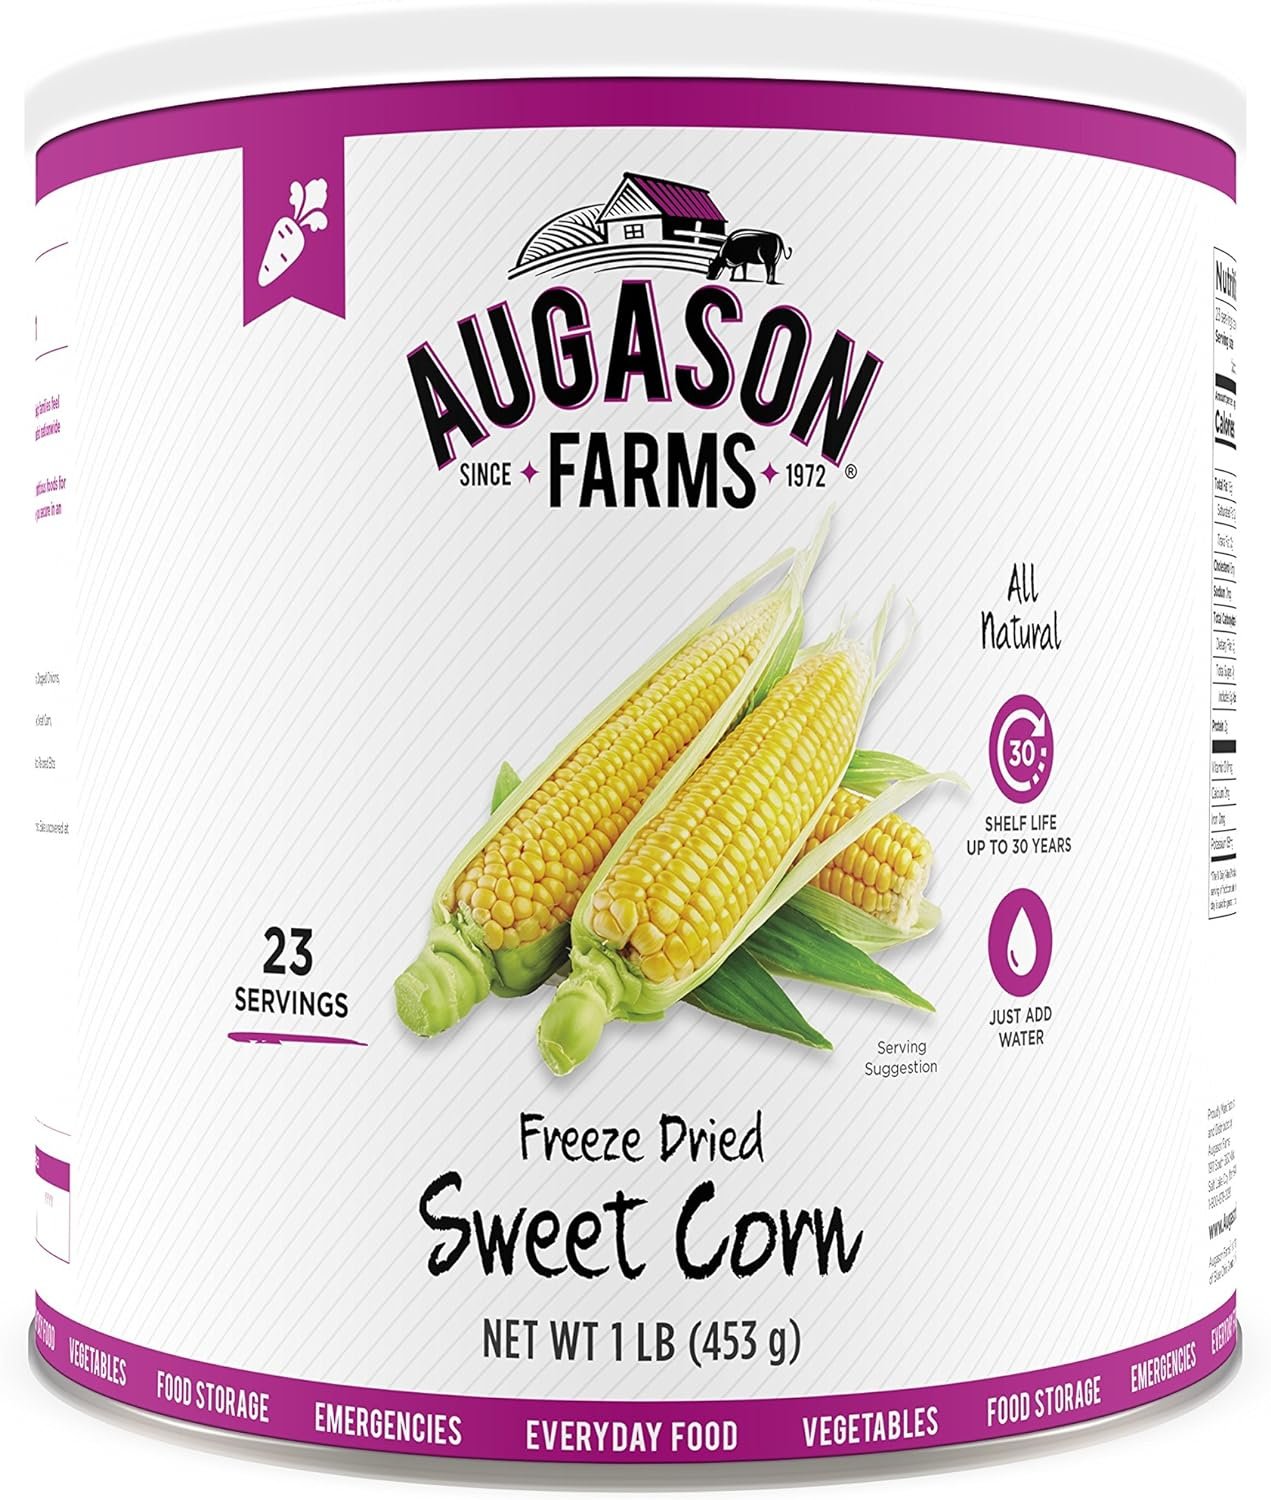 Augason Farms Freeze Dried Sweet Corn Review